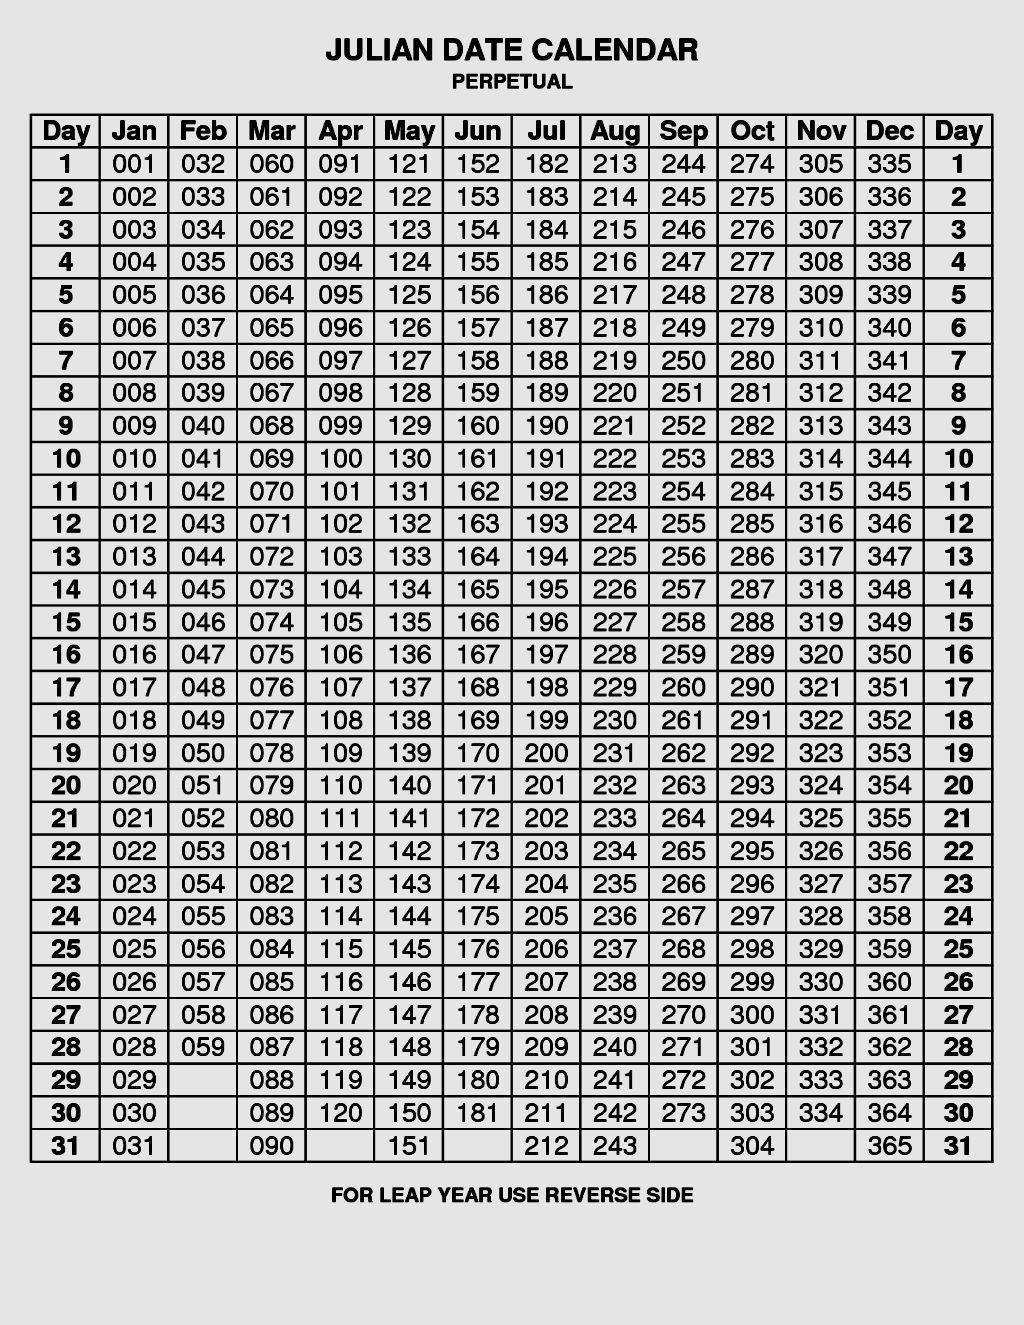 Depo Provera Calendar 2021 Calculator - Template Calendar  Depo Calendar Calculator 2021 2021